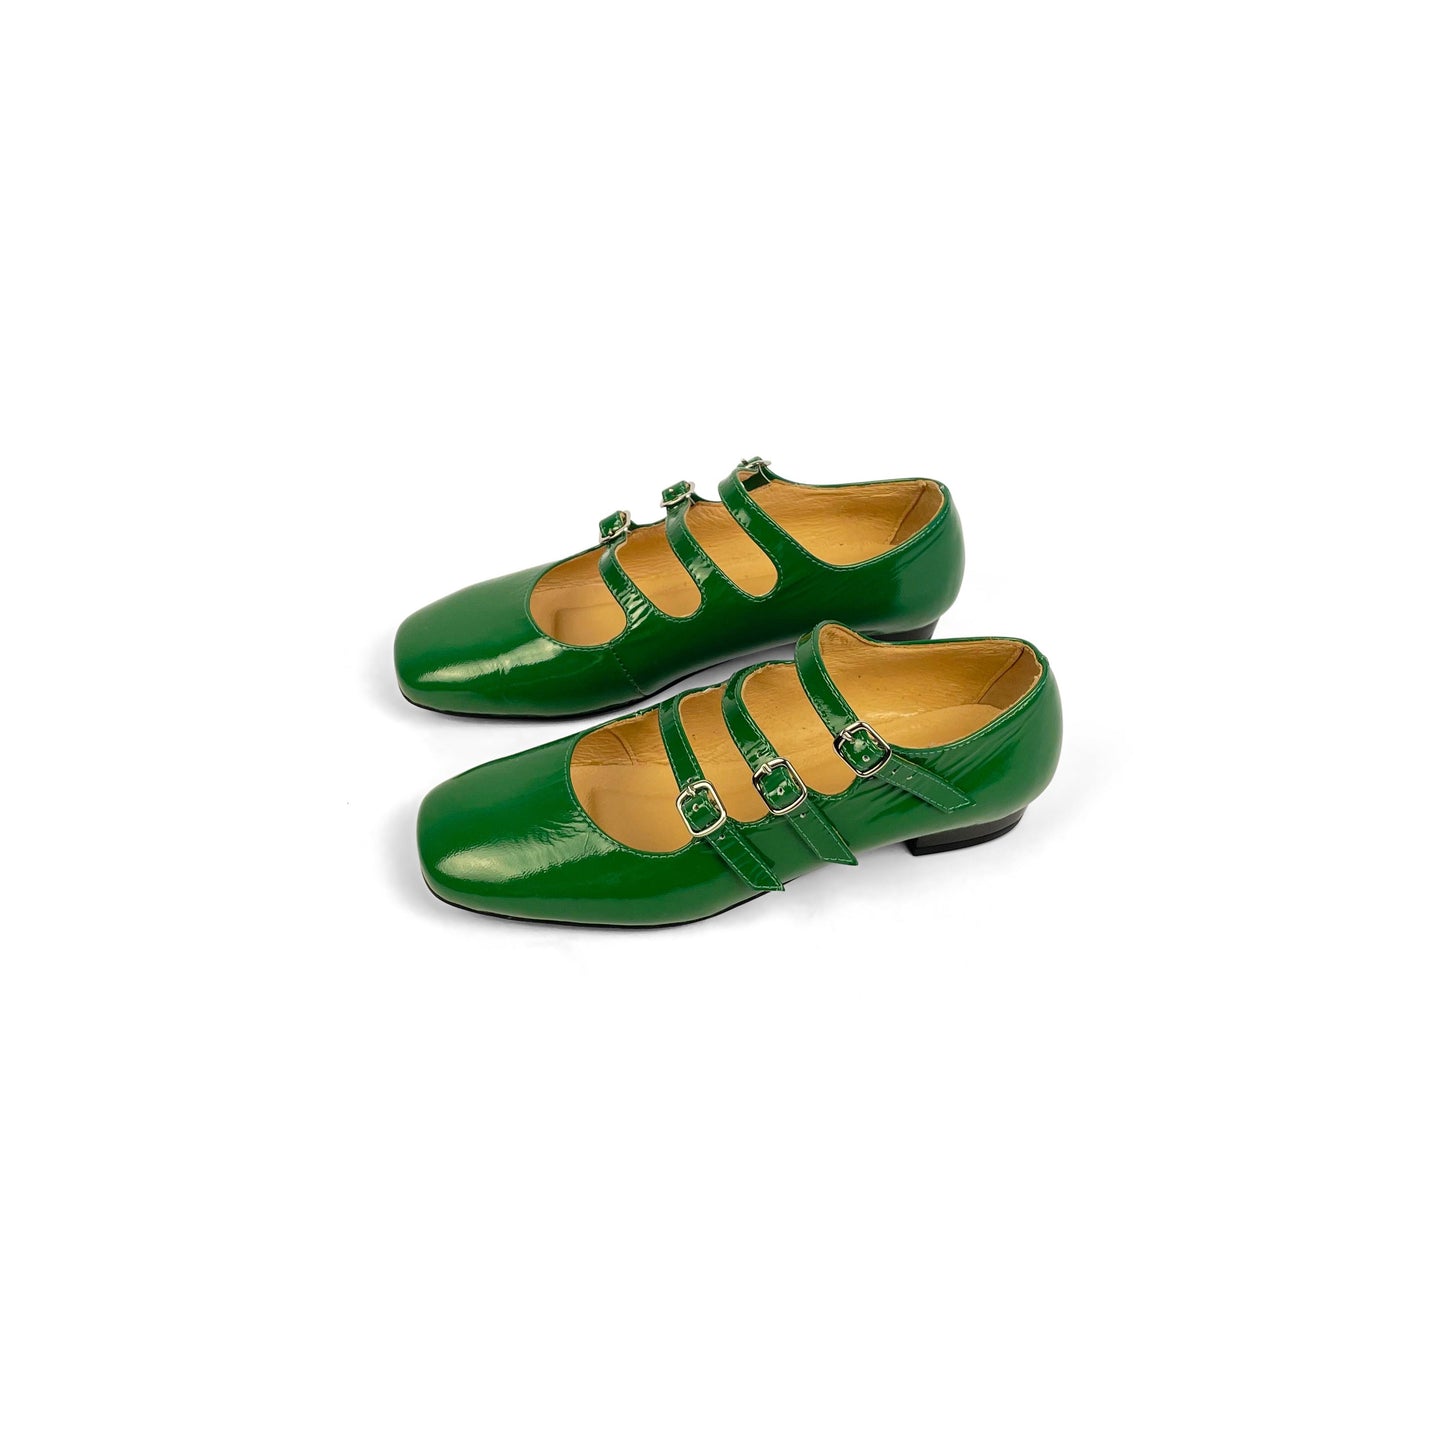 Women Mary Jane Shoe 1 Inch Heel Green Patent Leather